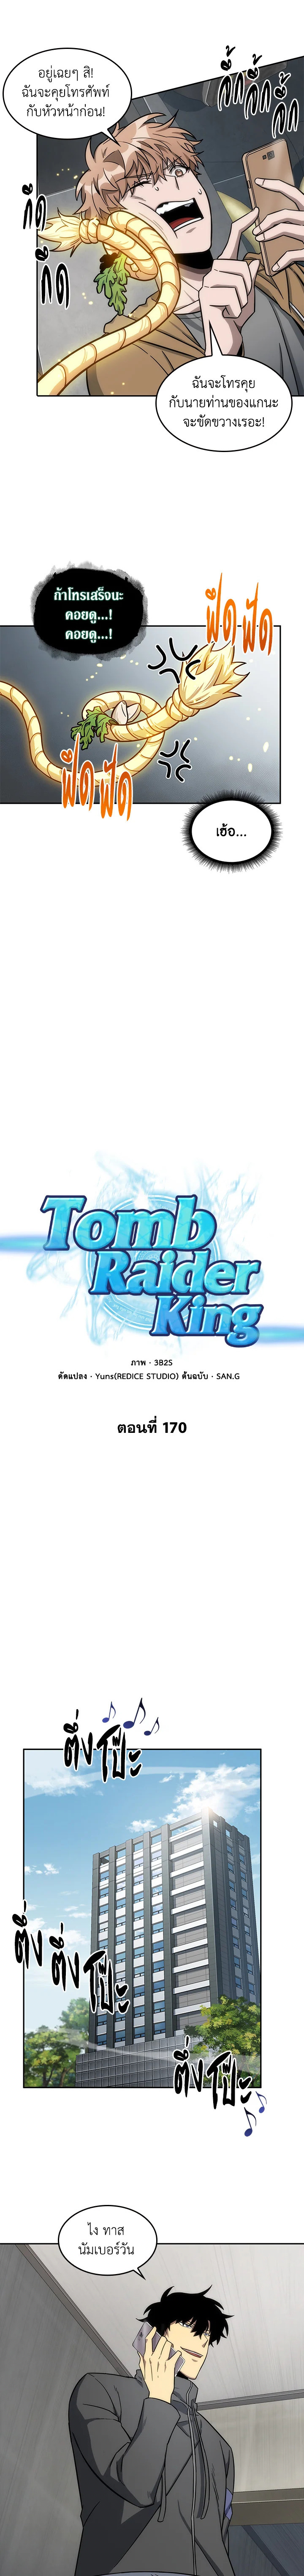 Tomb Raider King170 (3)